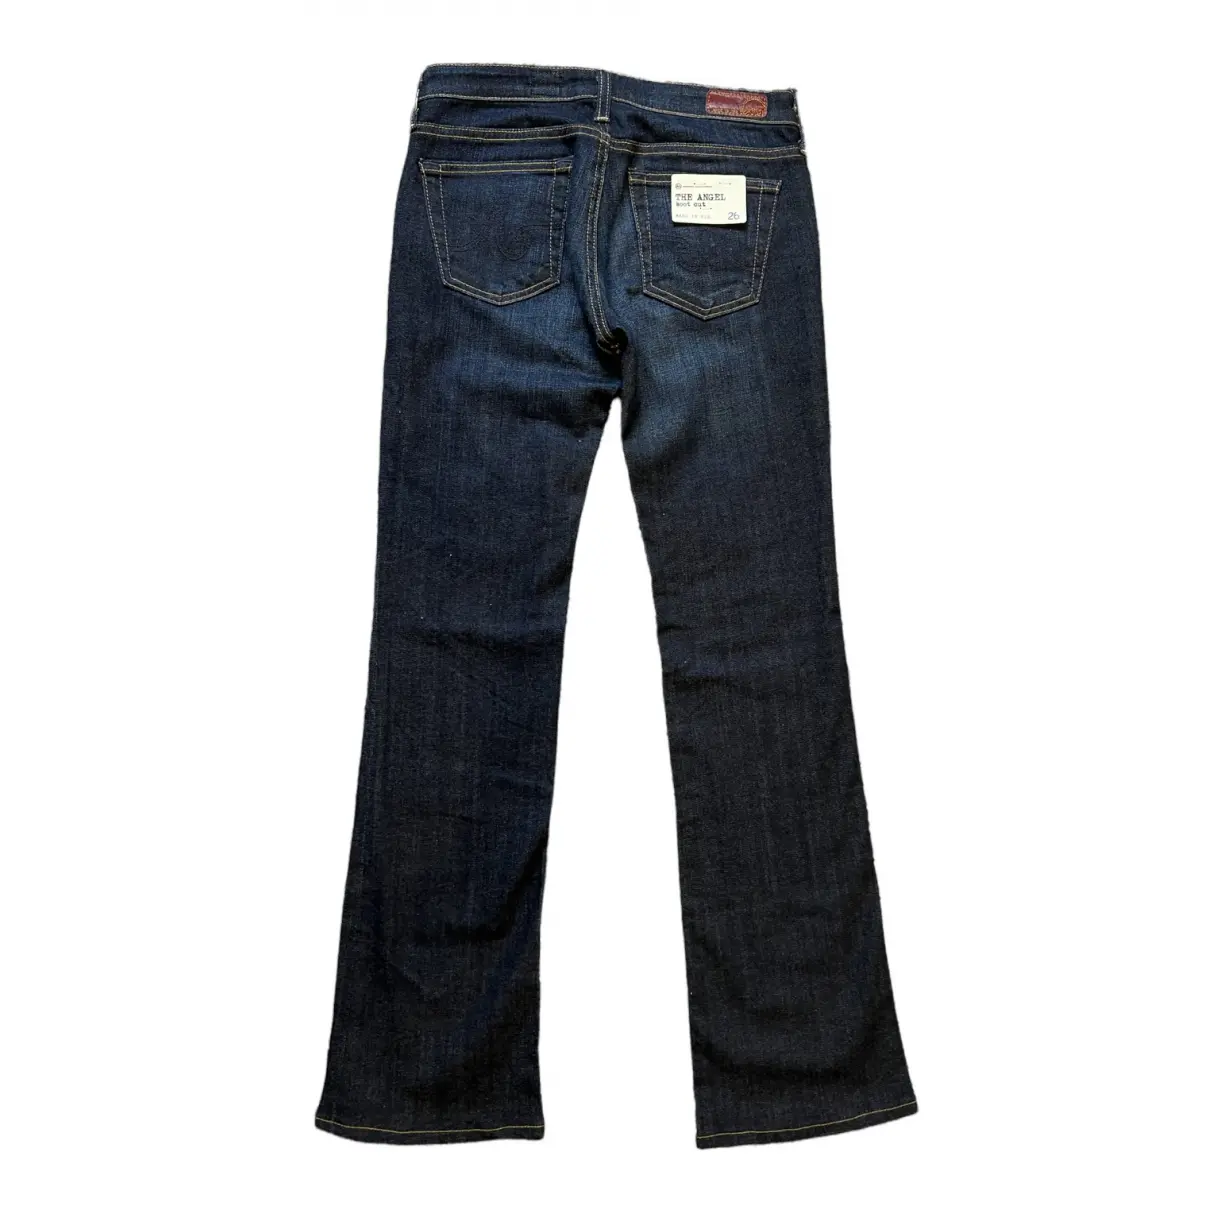 Buy Adriano Goldschmied Bootcut jeans online